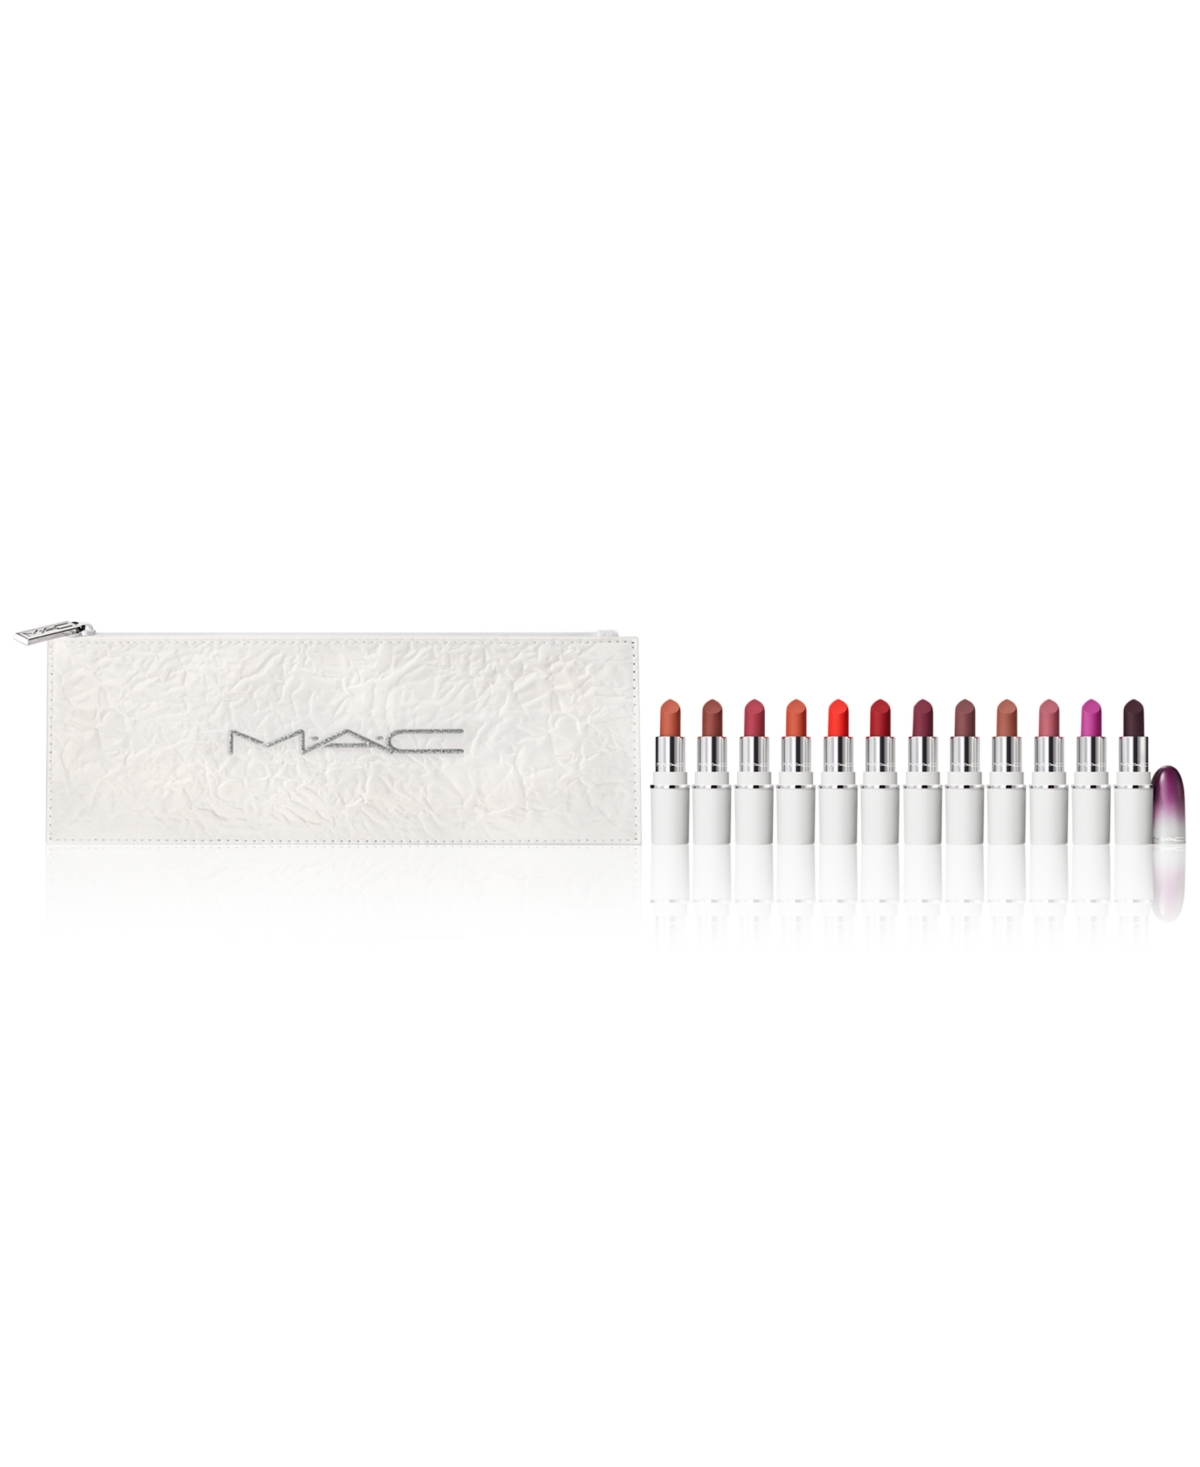 13-Piece Mac Lips By The Dozen Mini Powder Kiss Lipstick Set $44.50 + Free Shipping